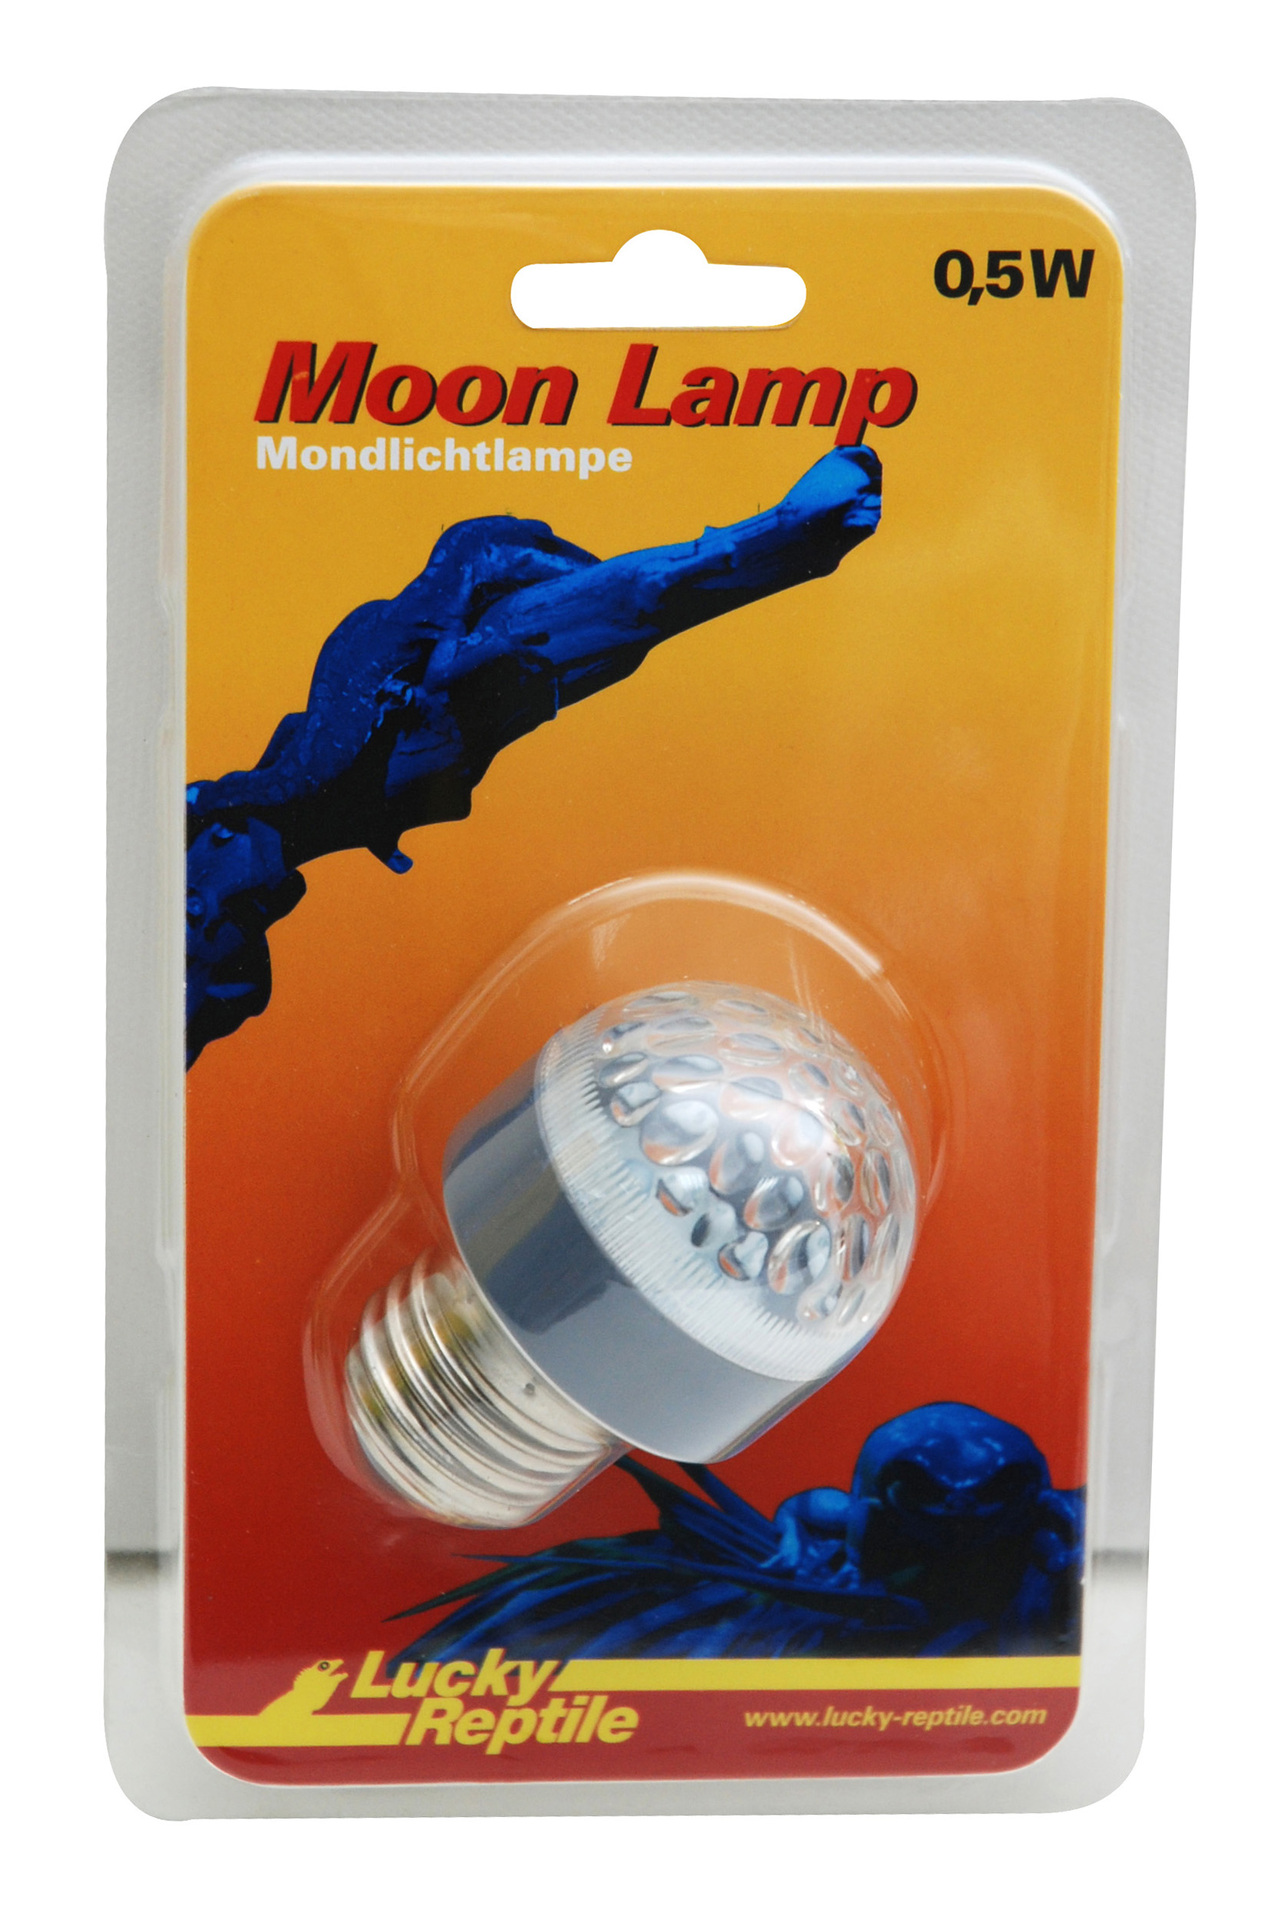 Import-Export Peter Hoch GmbH Moon Lamp